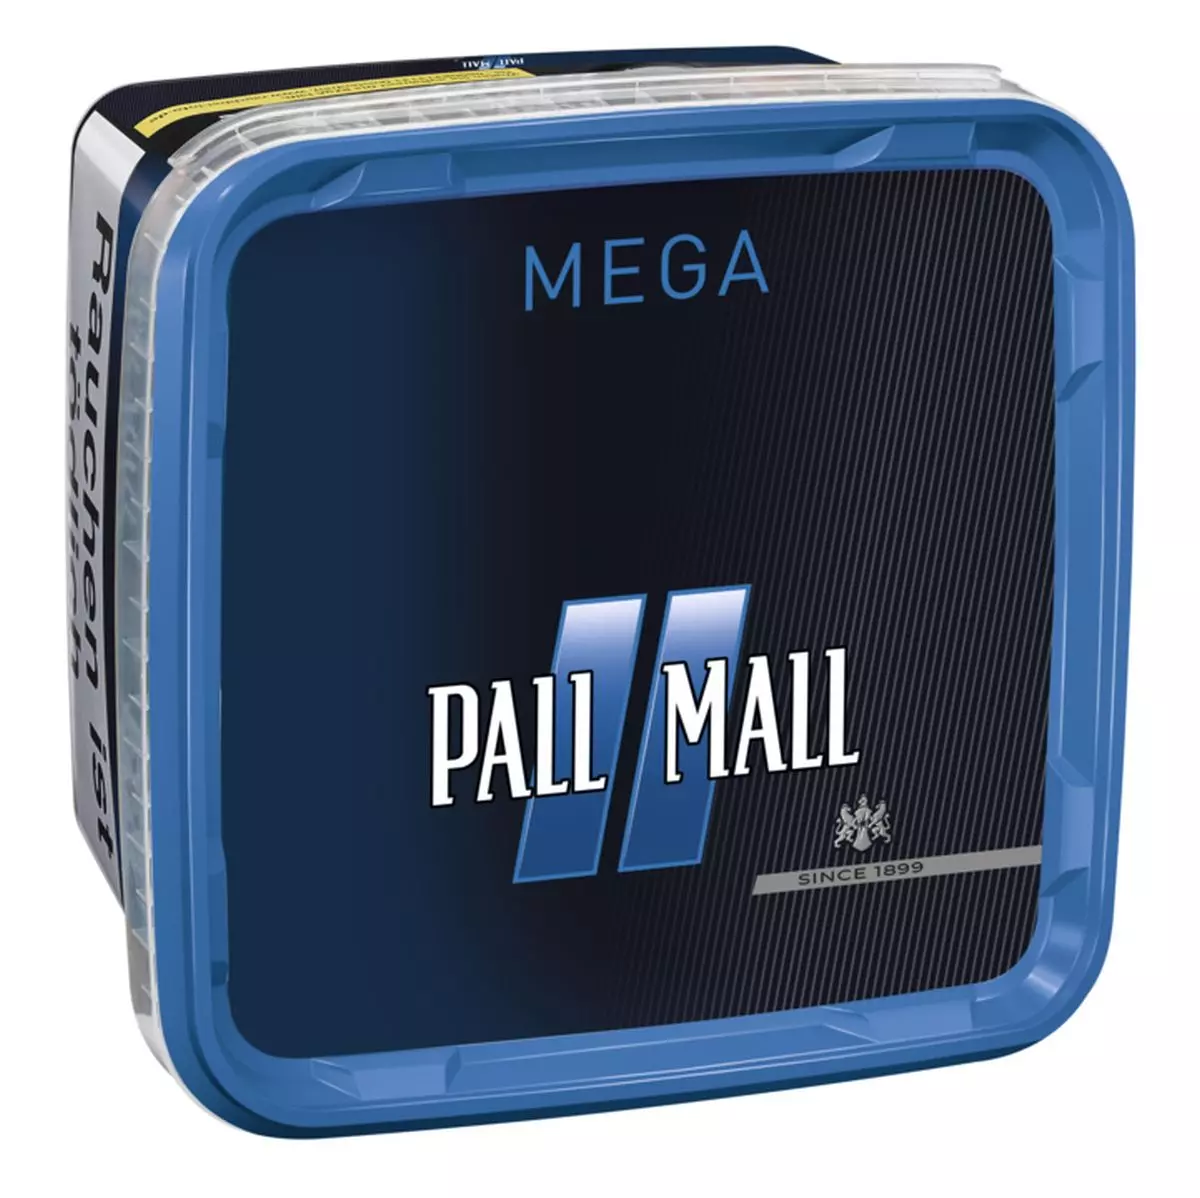 Pall Mall Blue Mega Box 1 x 135g Tabak